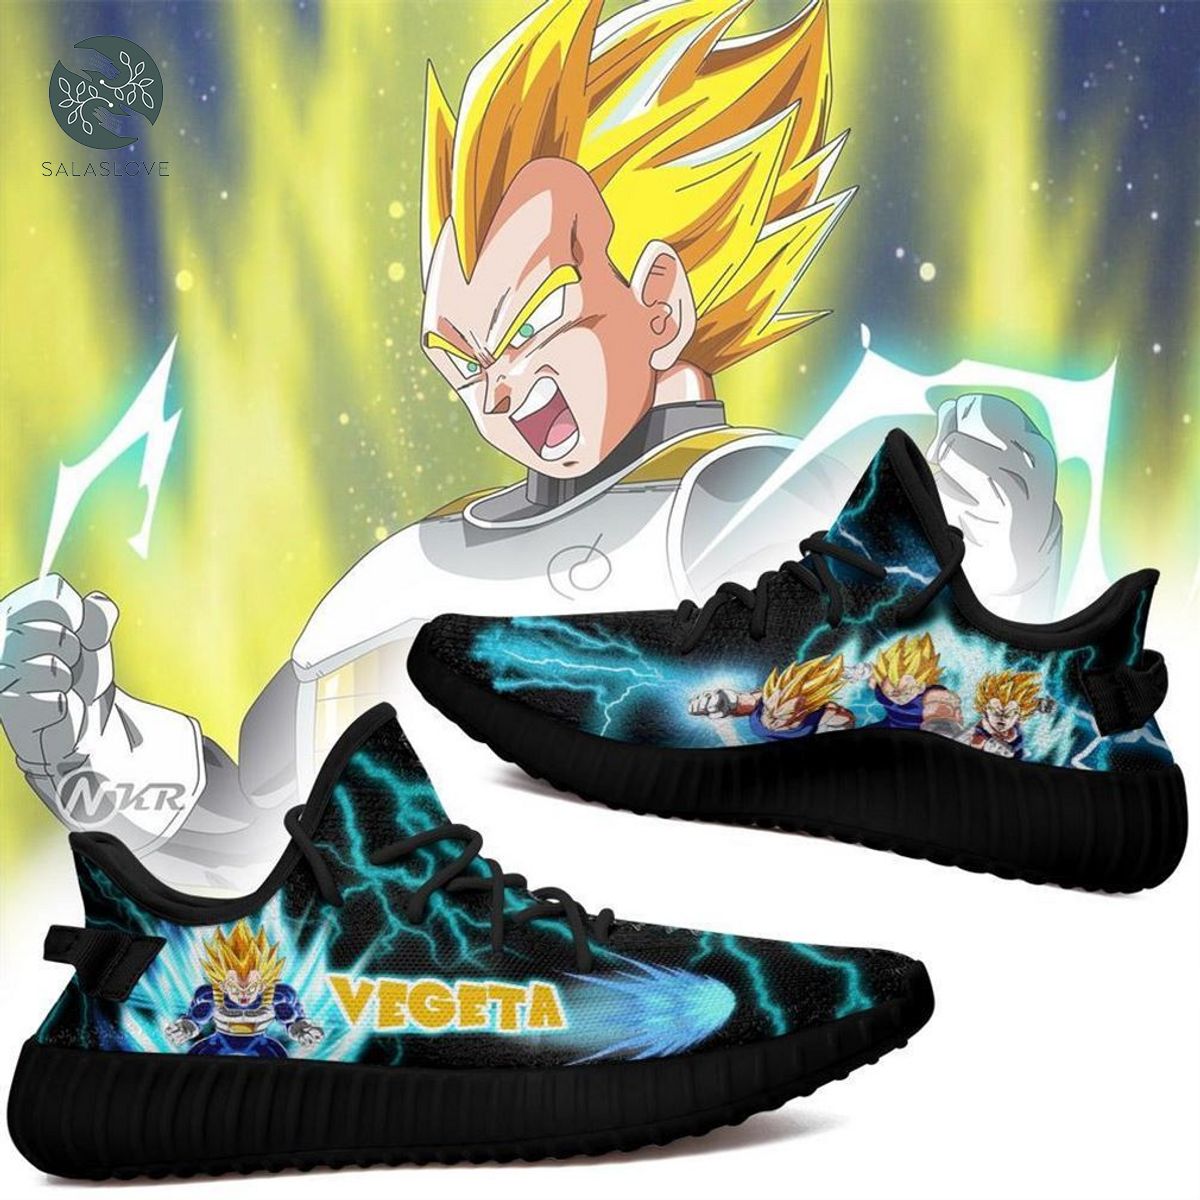 Vegeta Power Yz Sneakers Dragon Ball Z Anime Yeezy Shoes